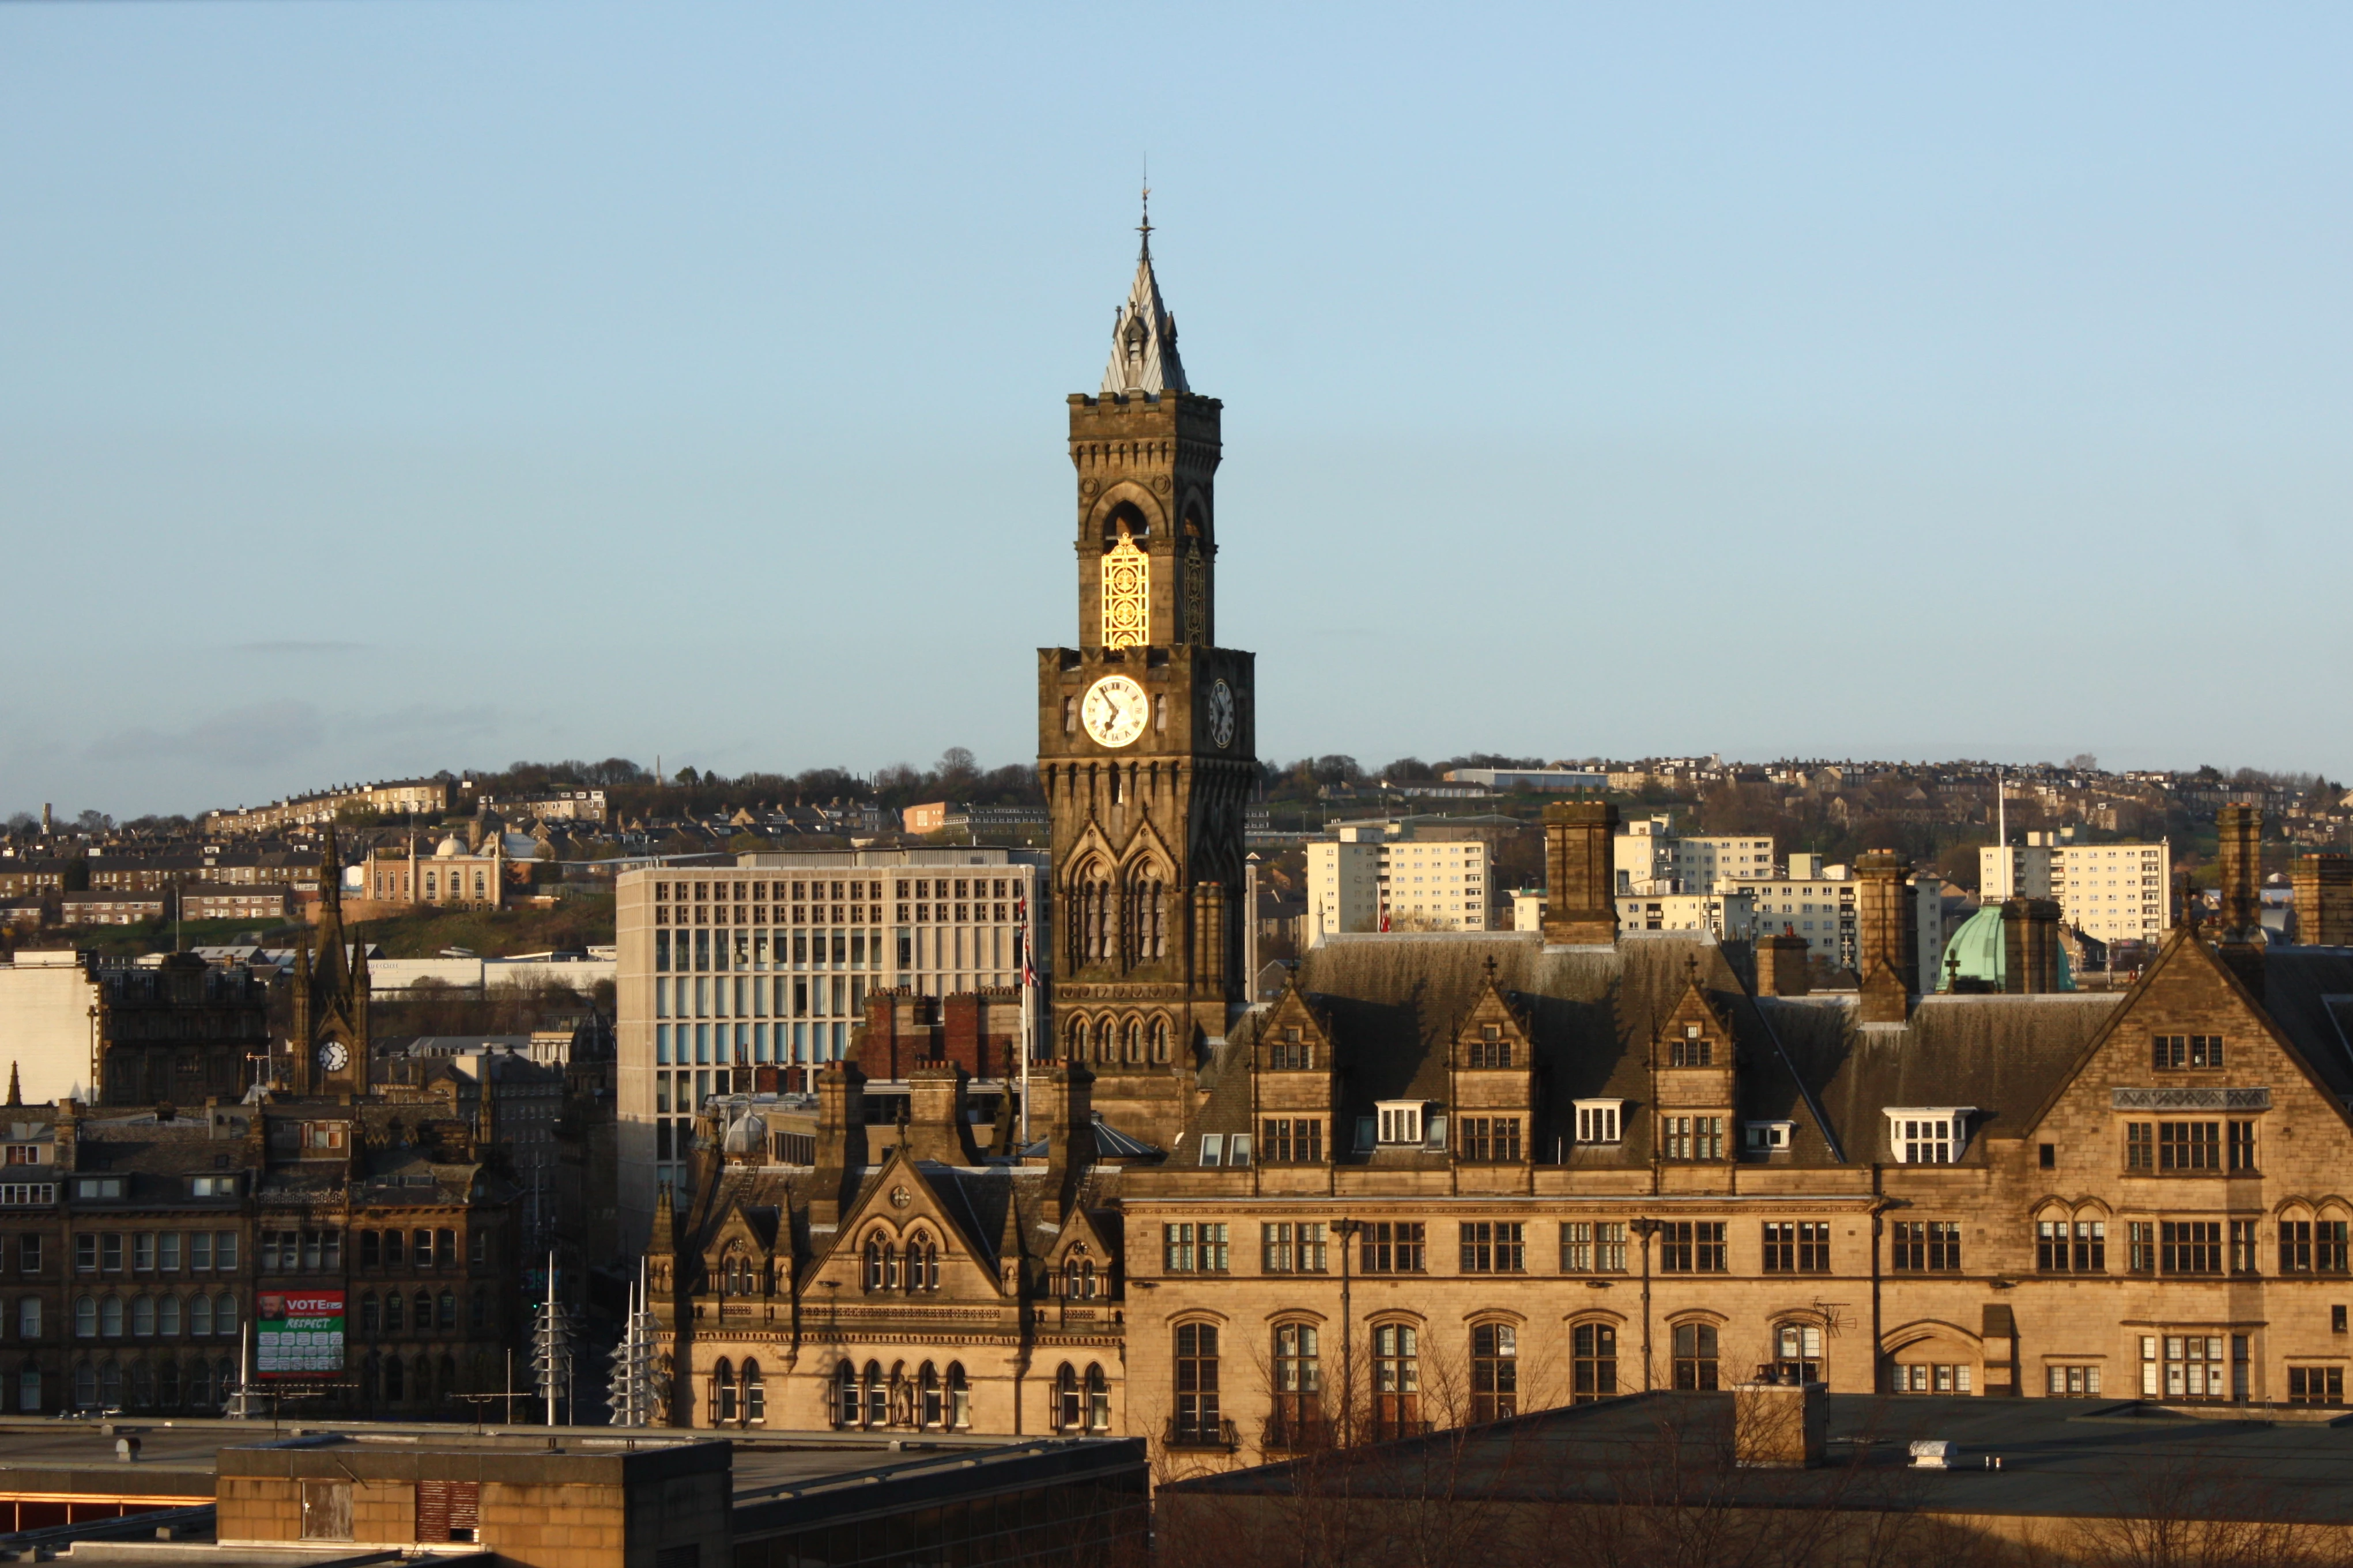 Bradford City Hall